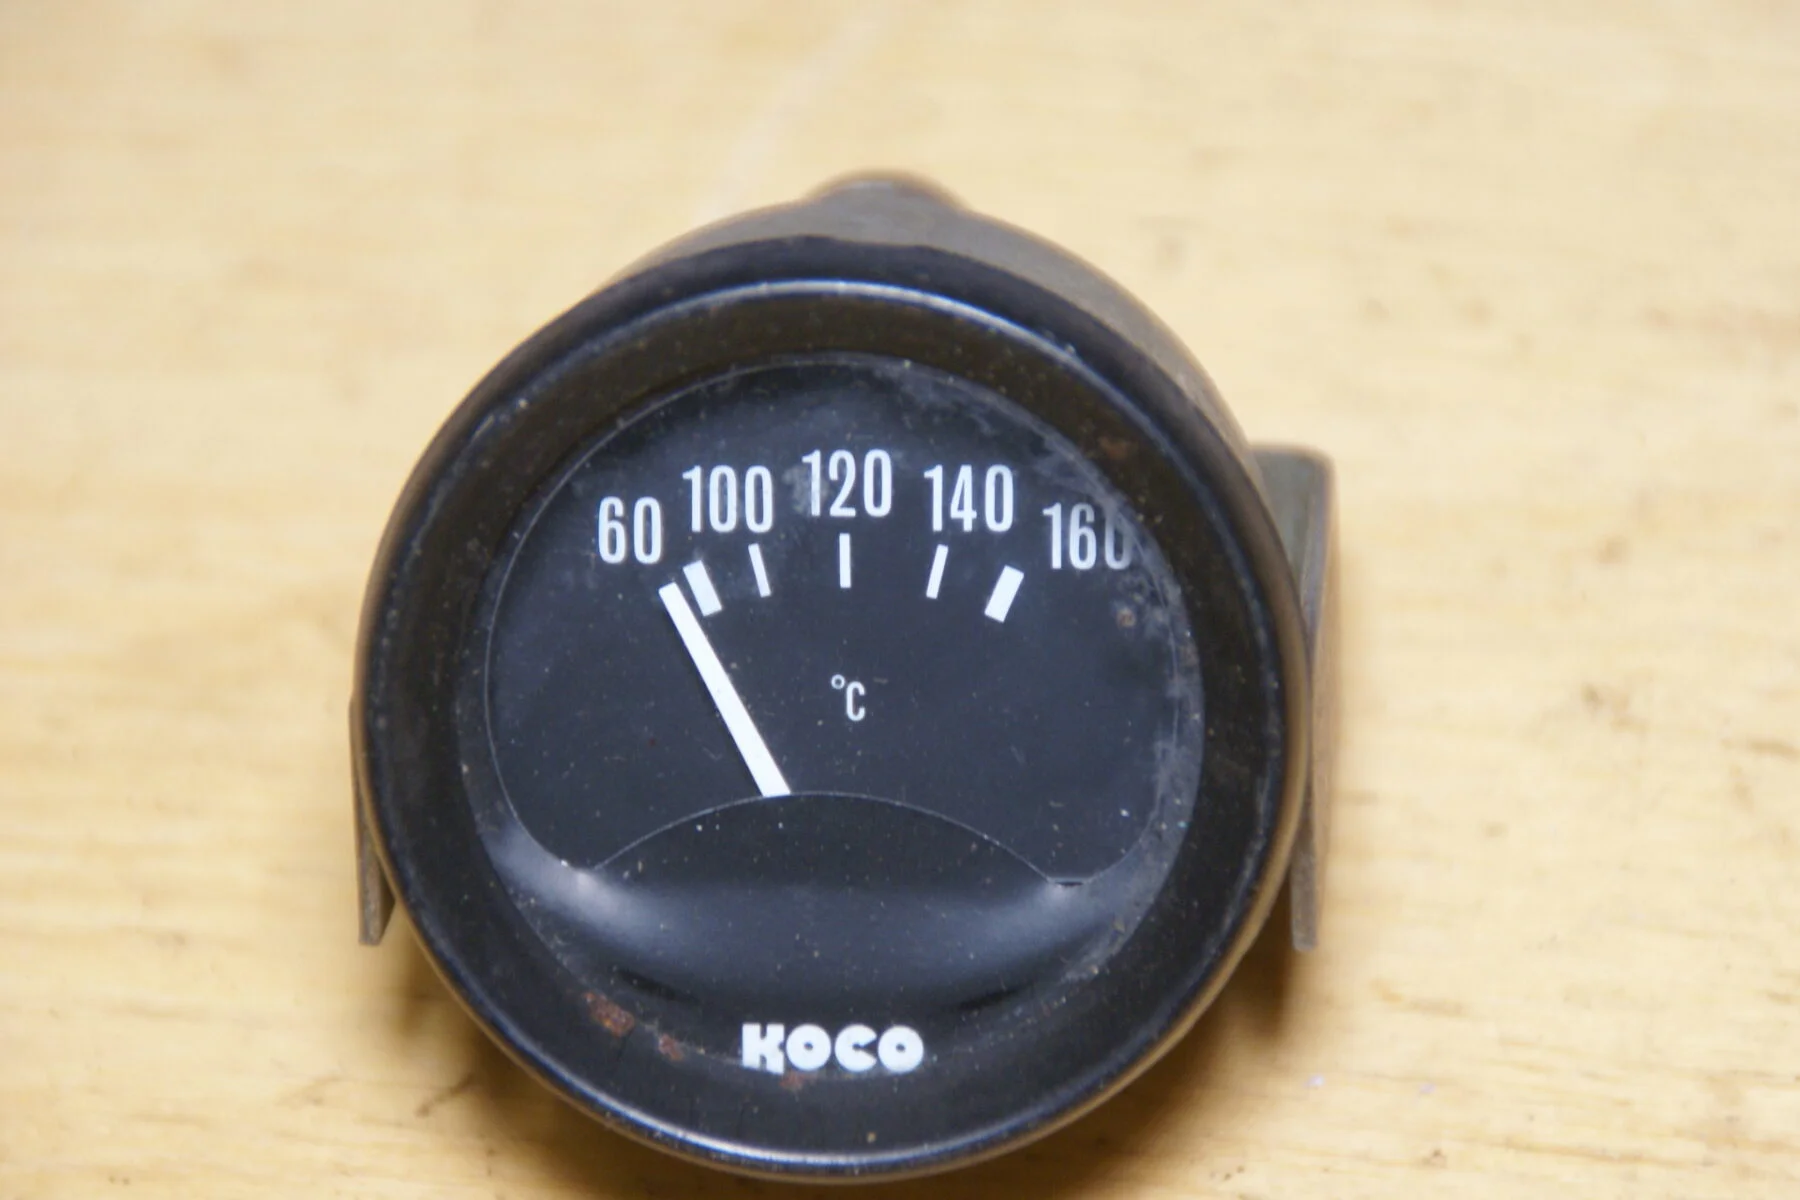 DSC01605 KOCO thermometer